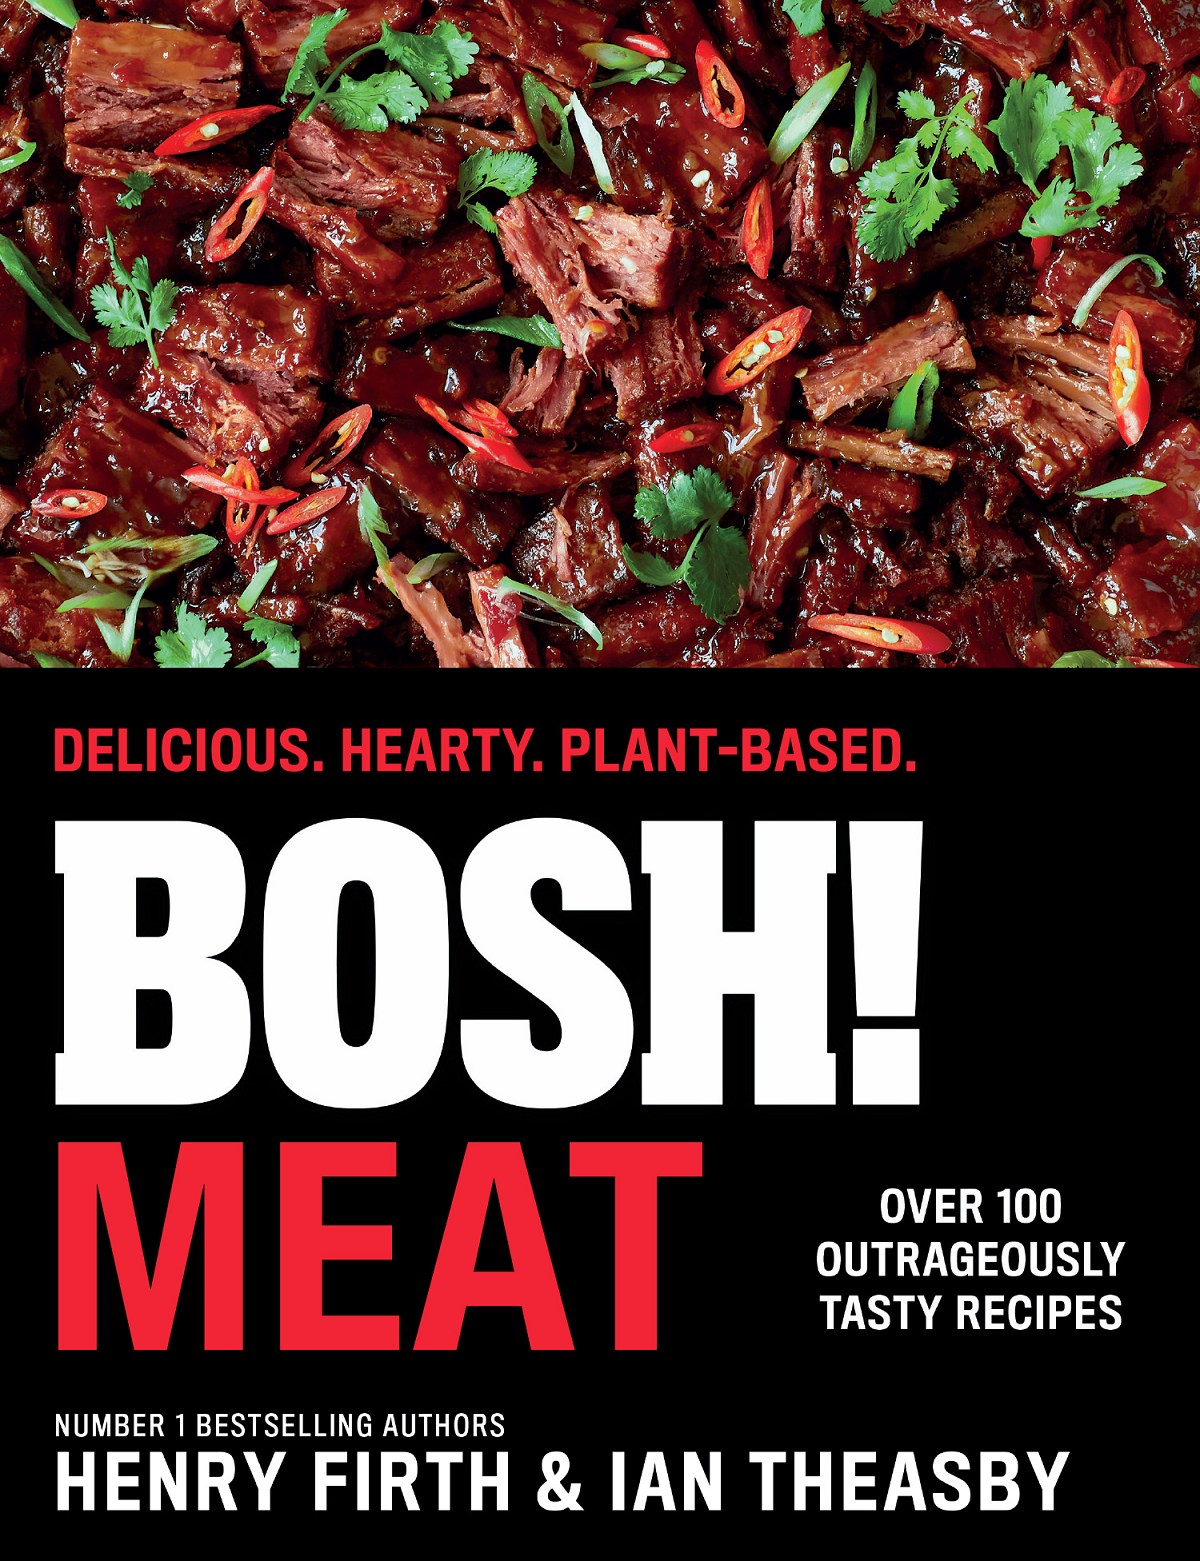 BOSH! MEAT cookbook